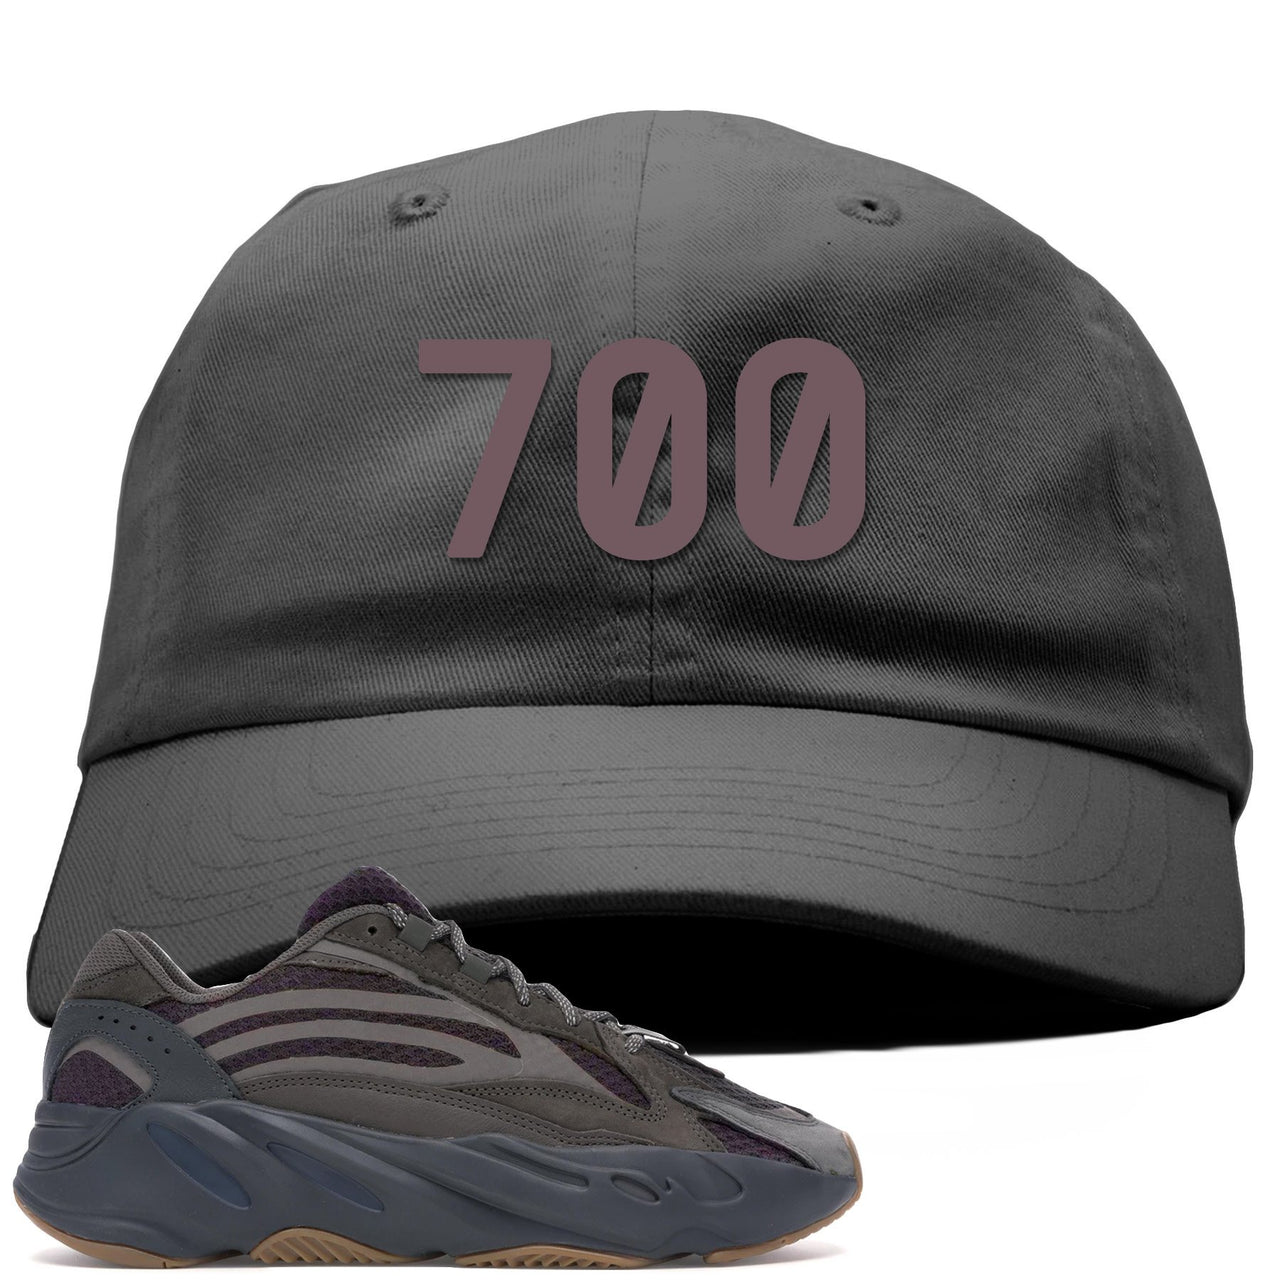 Geode 700s Dad Hat | 700, Gray